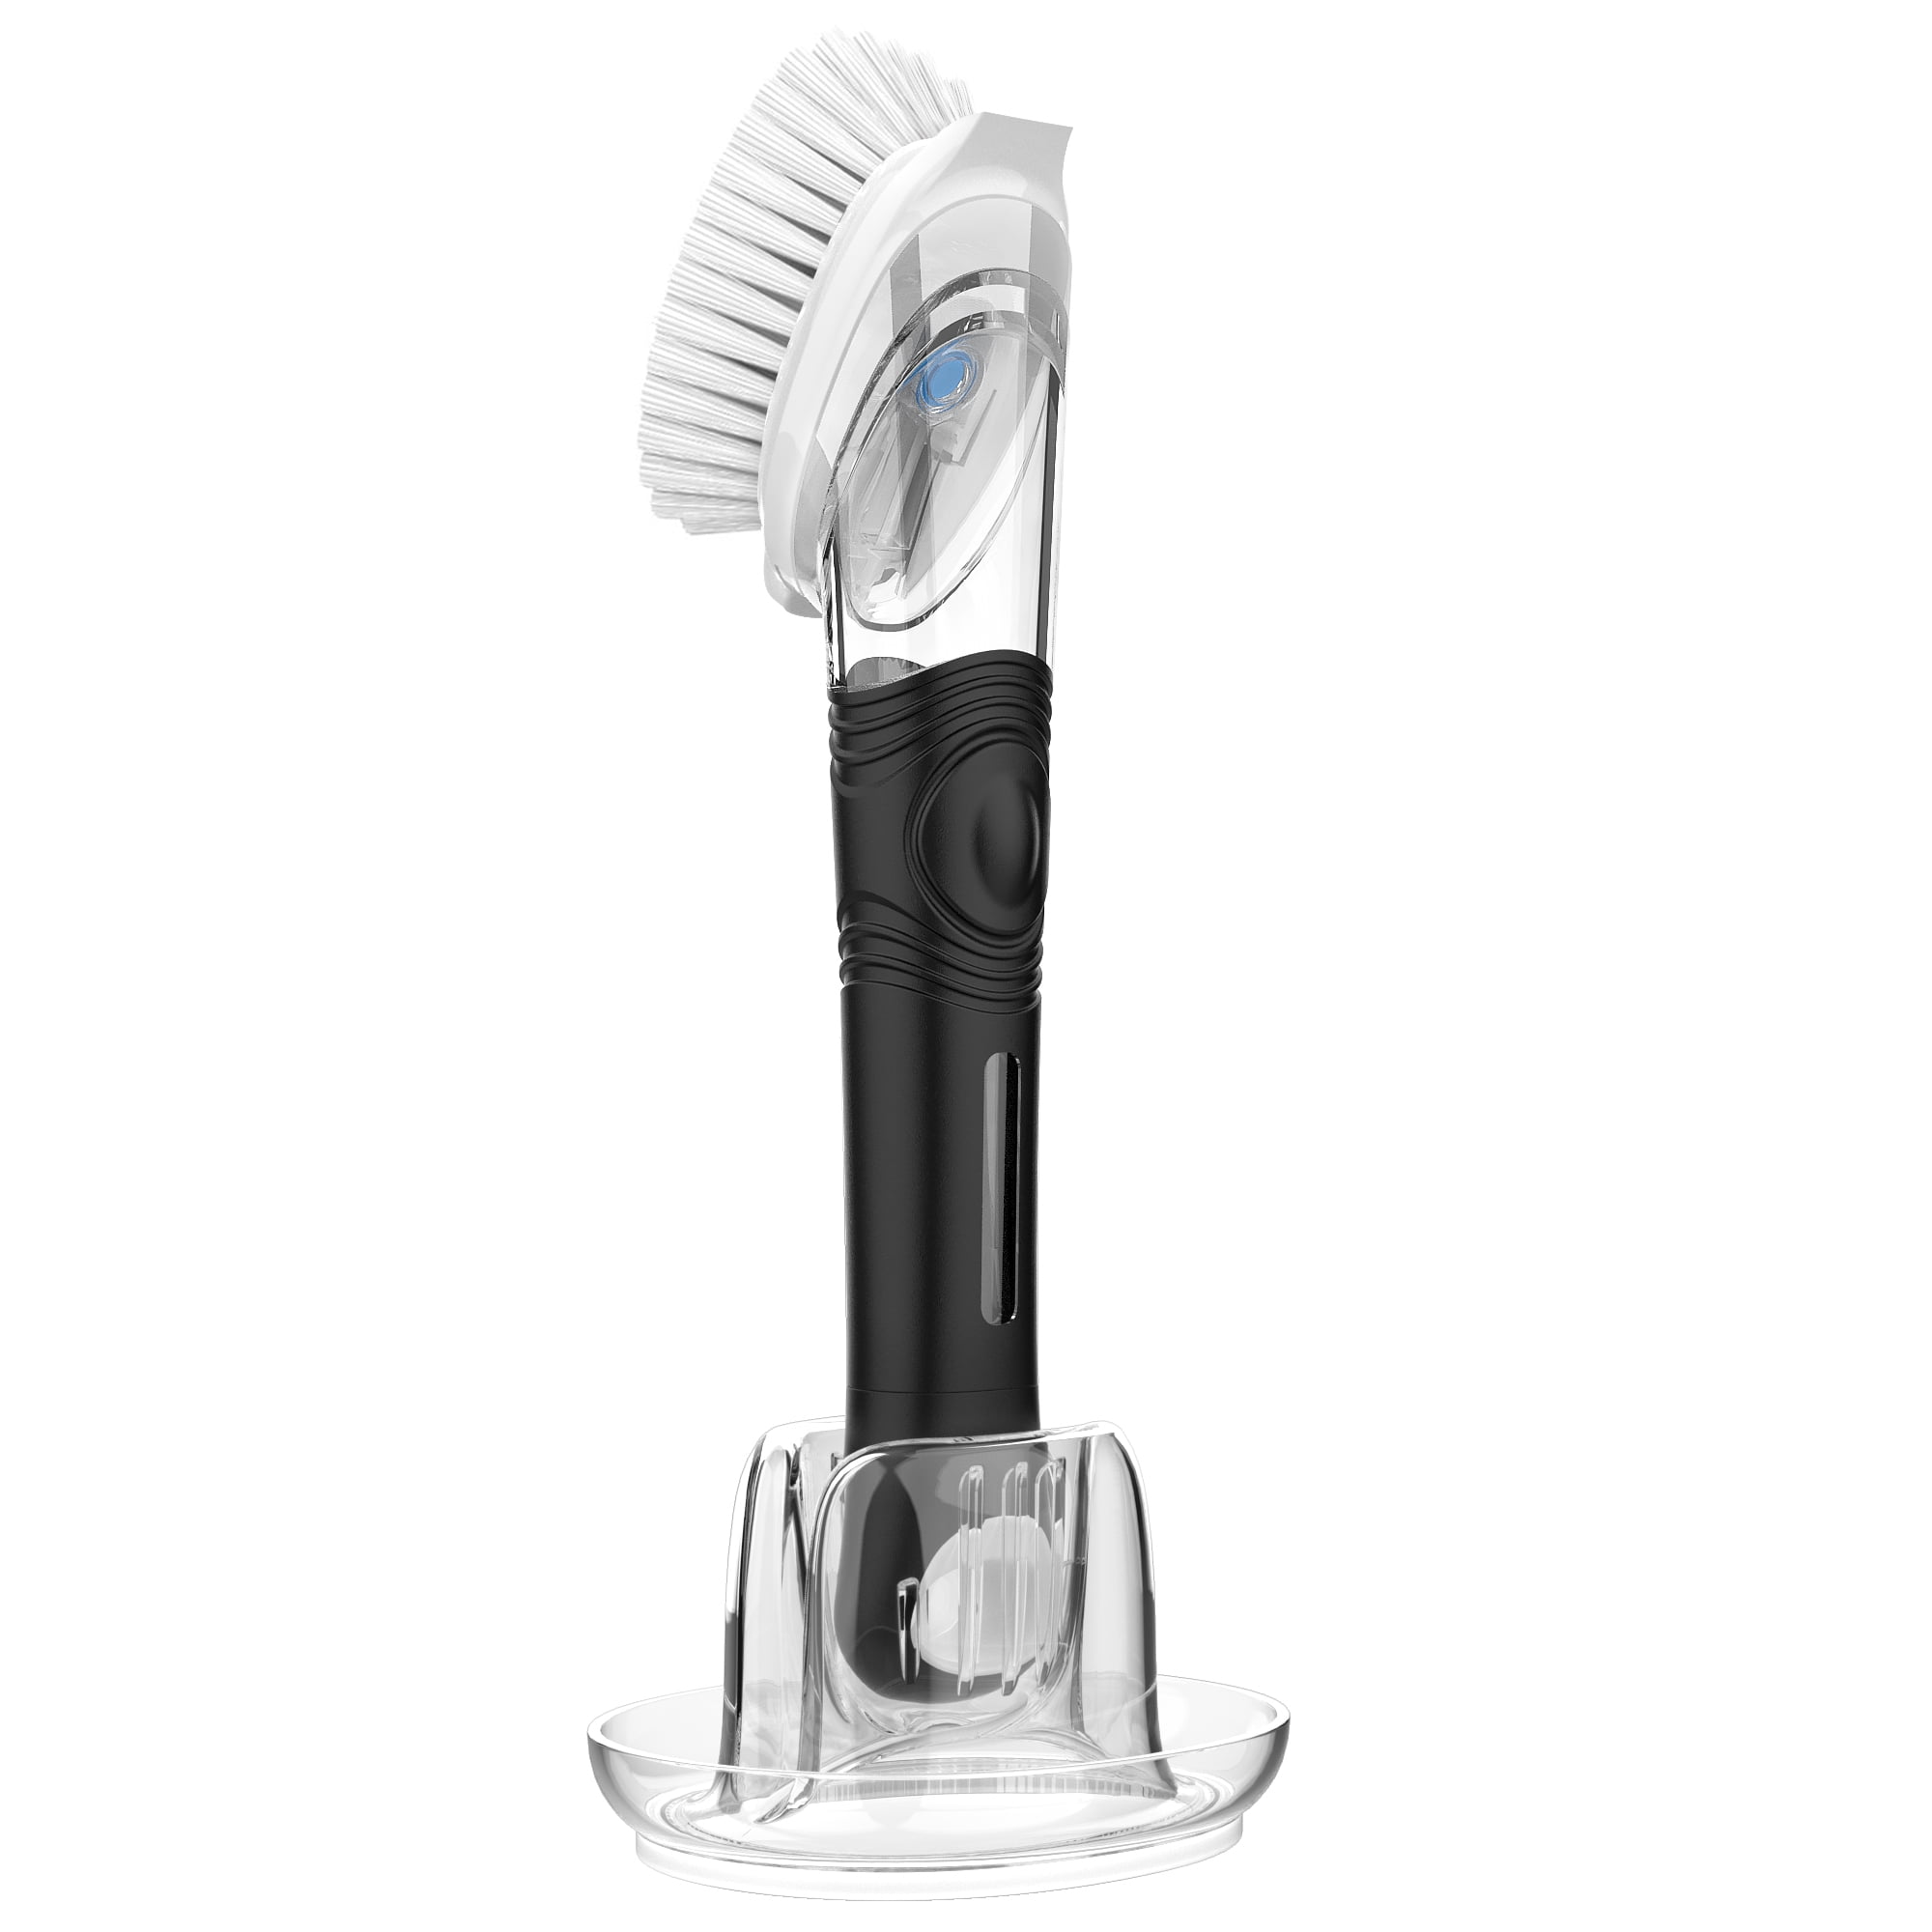 SUGARDAY Soap Dispensing Dish Brush Set Kitchen Scrub Brush with Stand 3  Brush Replacement Heads